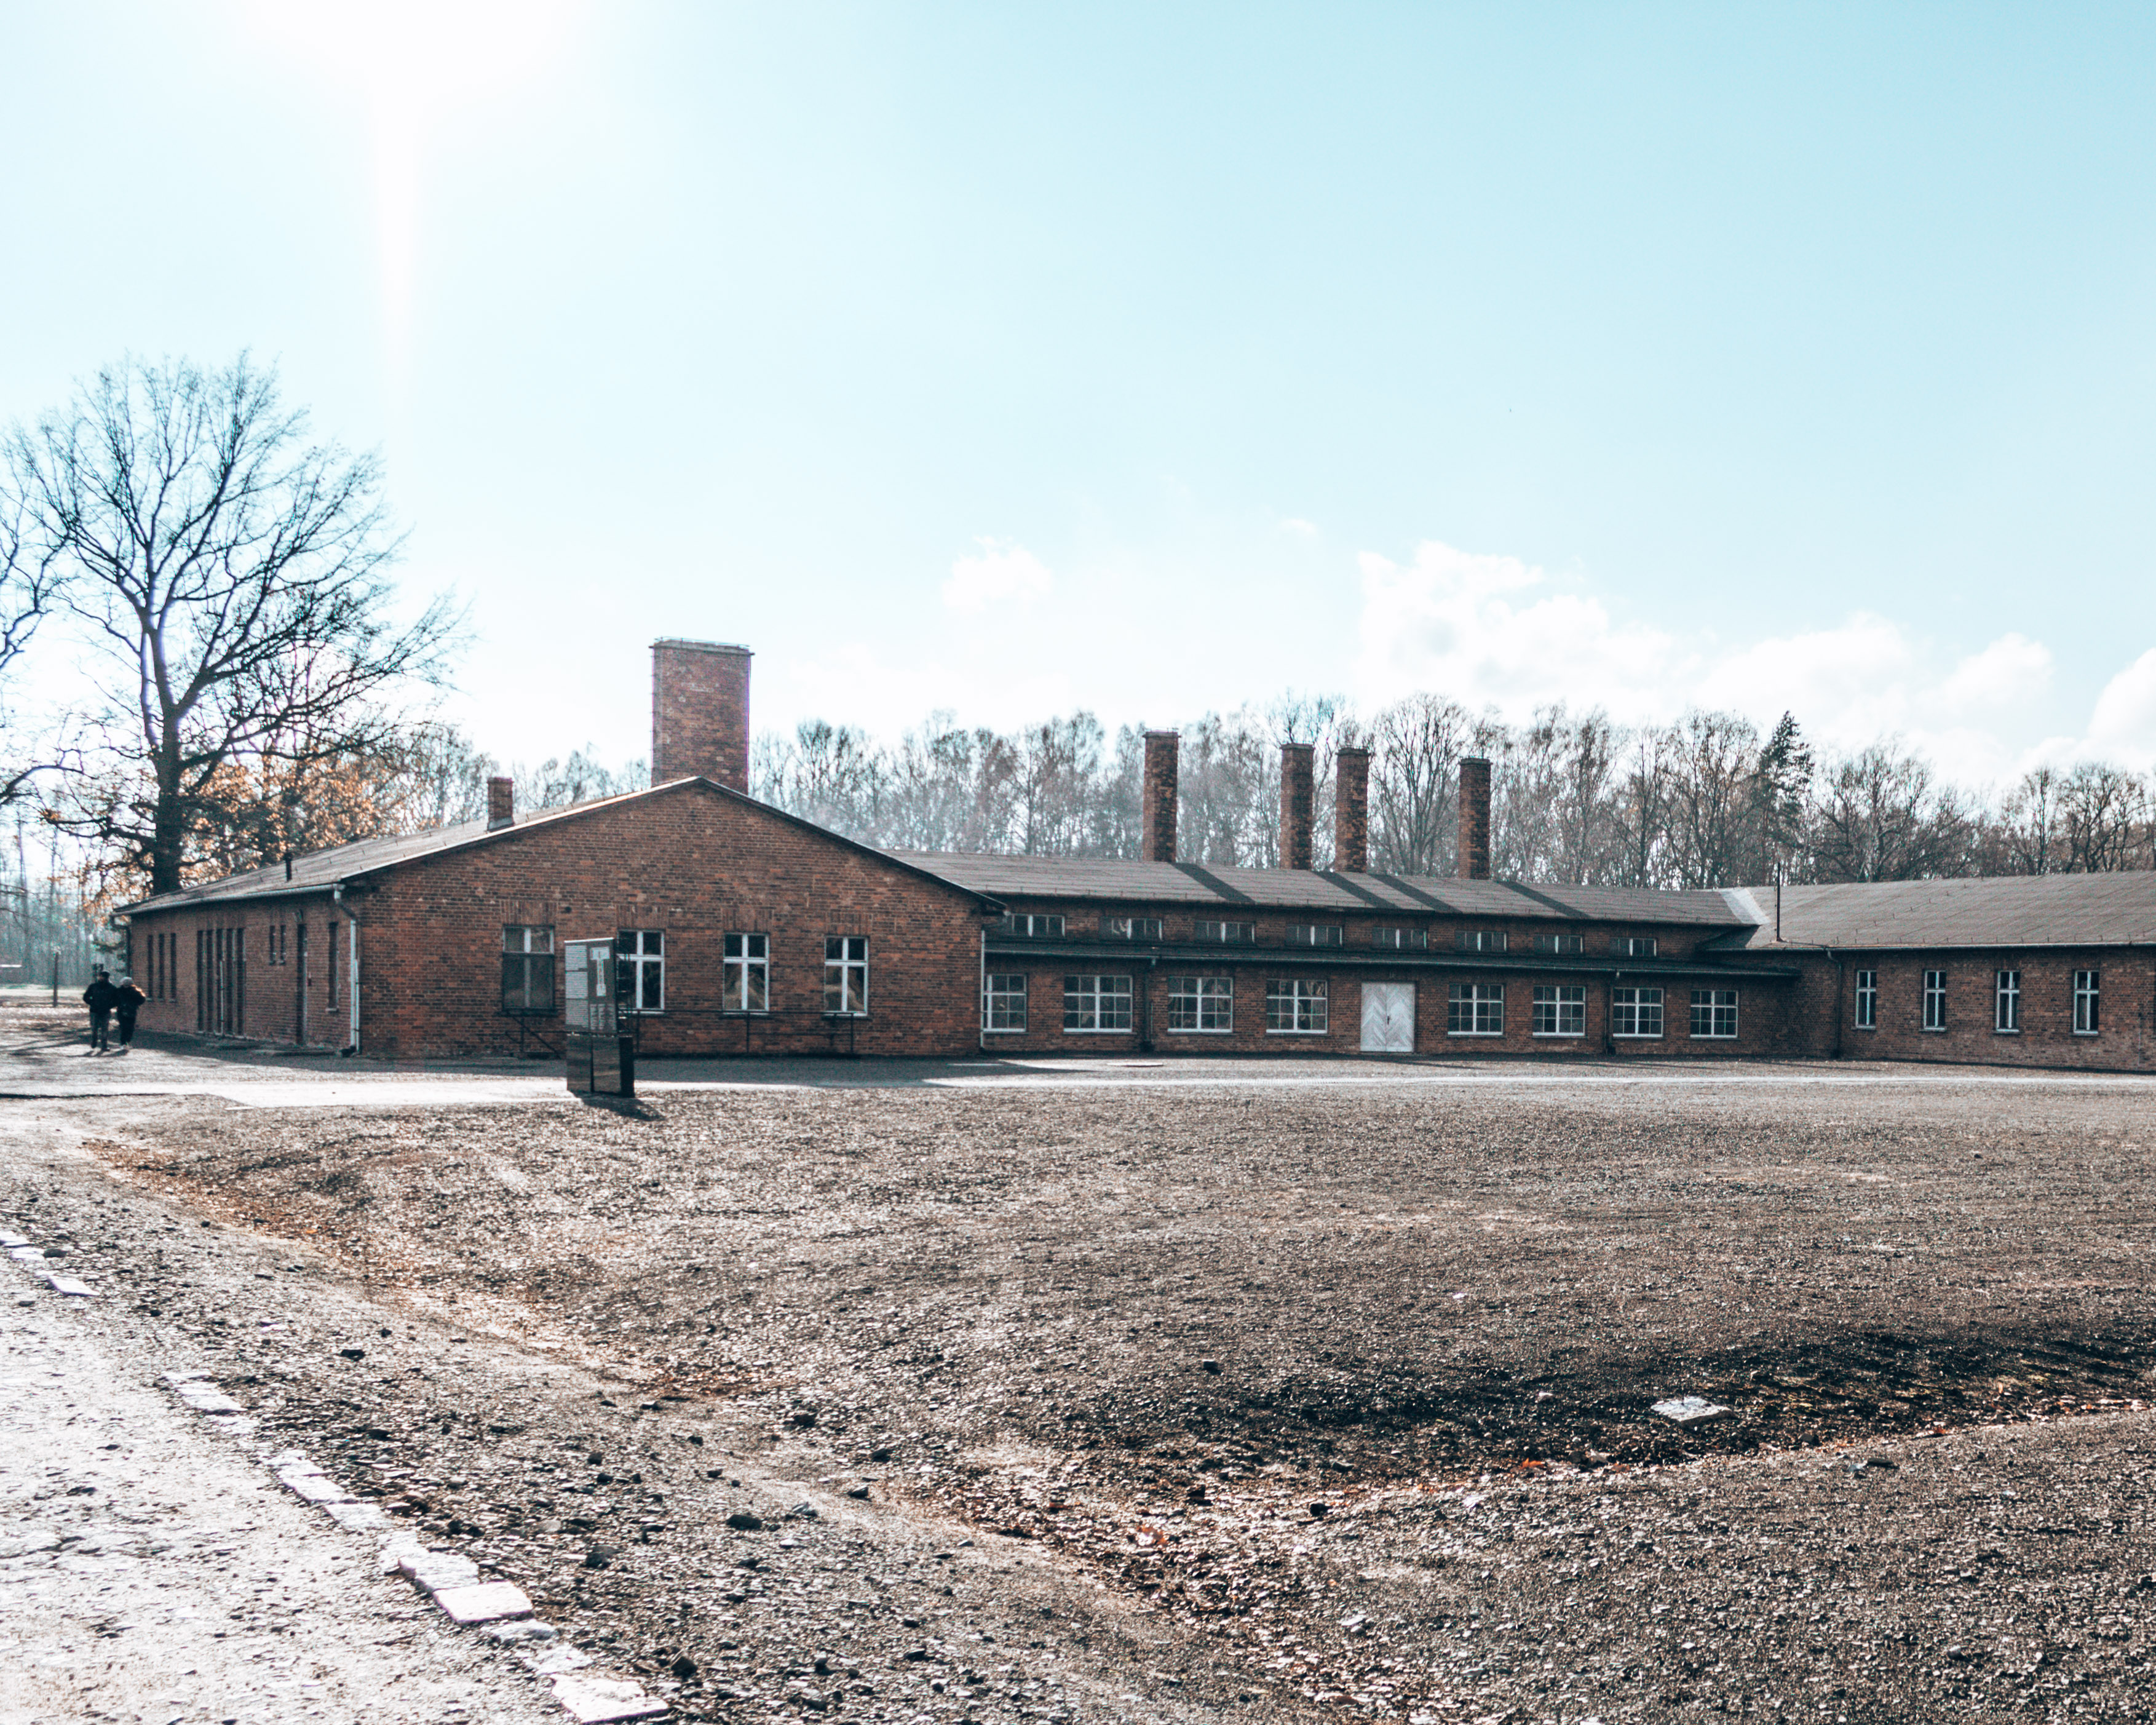 The sauna building at the Auschwitz-Birkeneau concentration camp in Poland